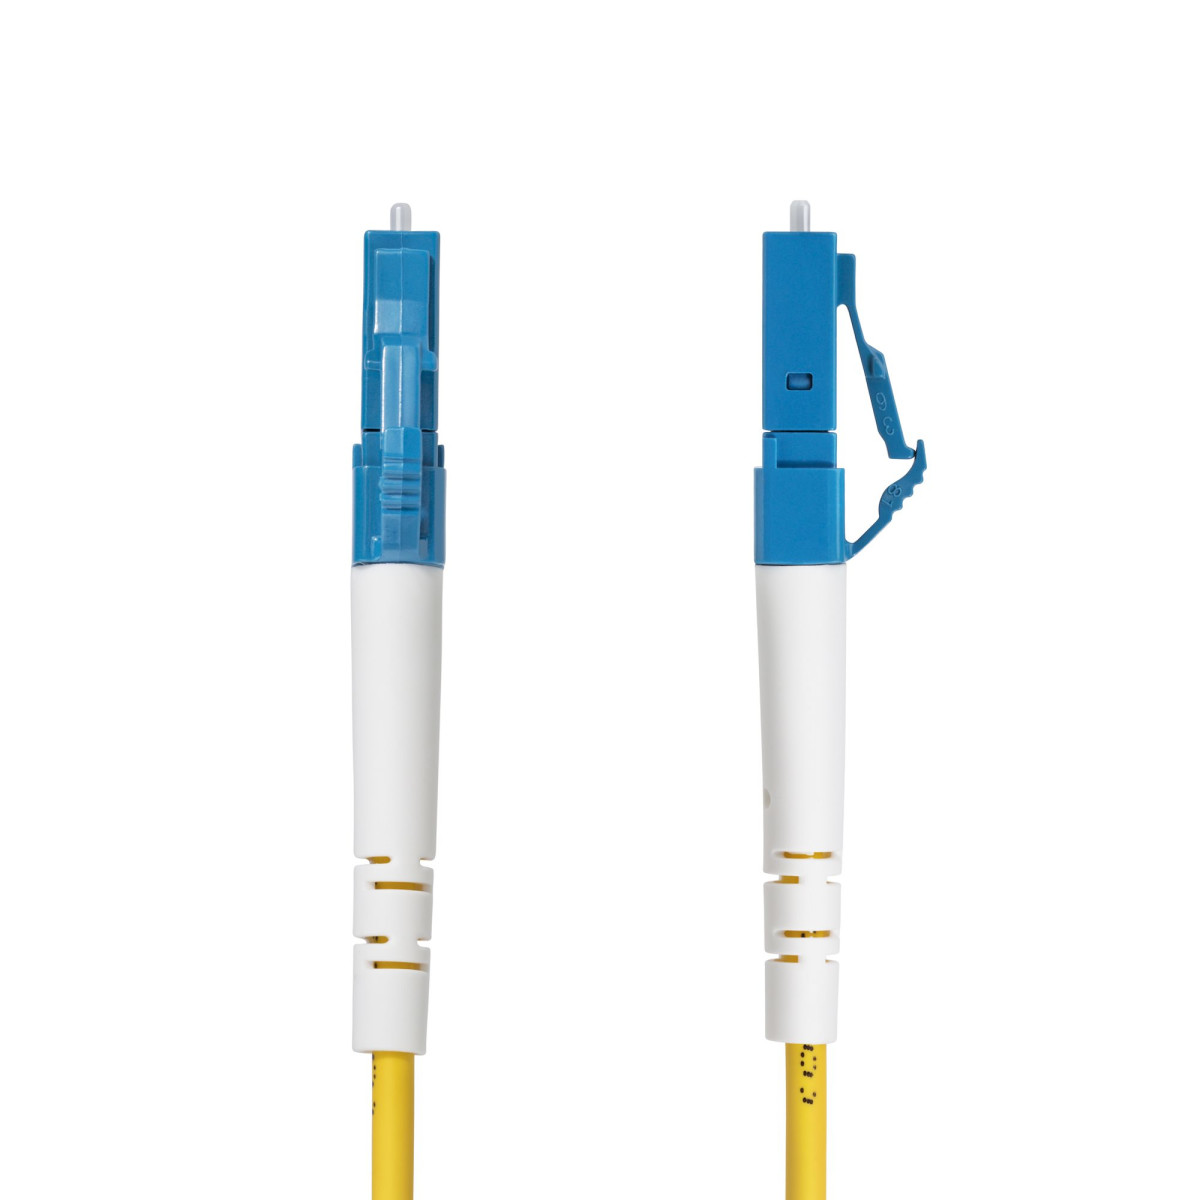 15m LC/SC OS2 Single Mode Fiber Cable